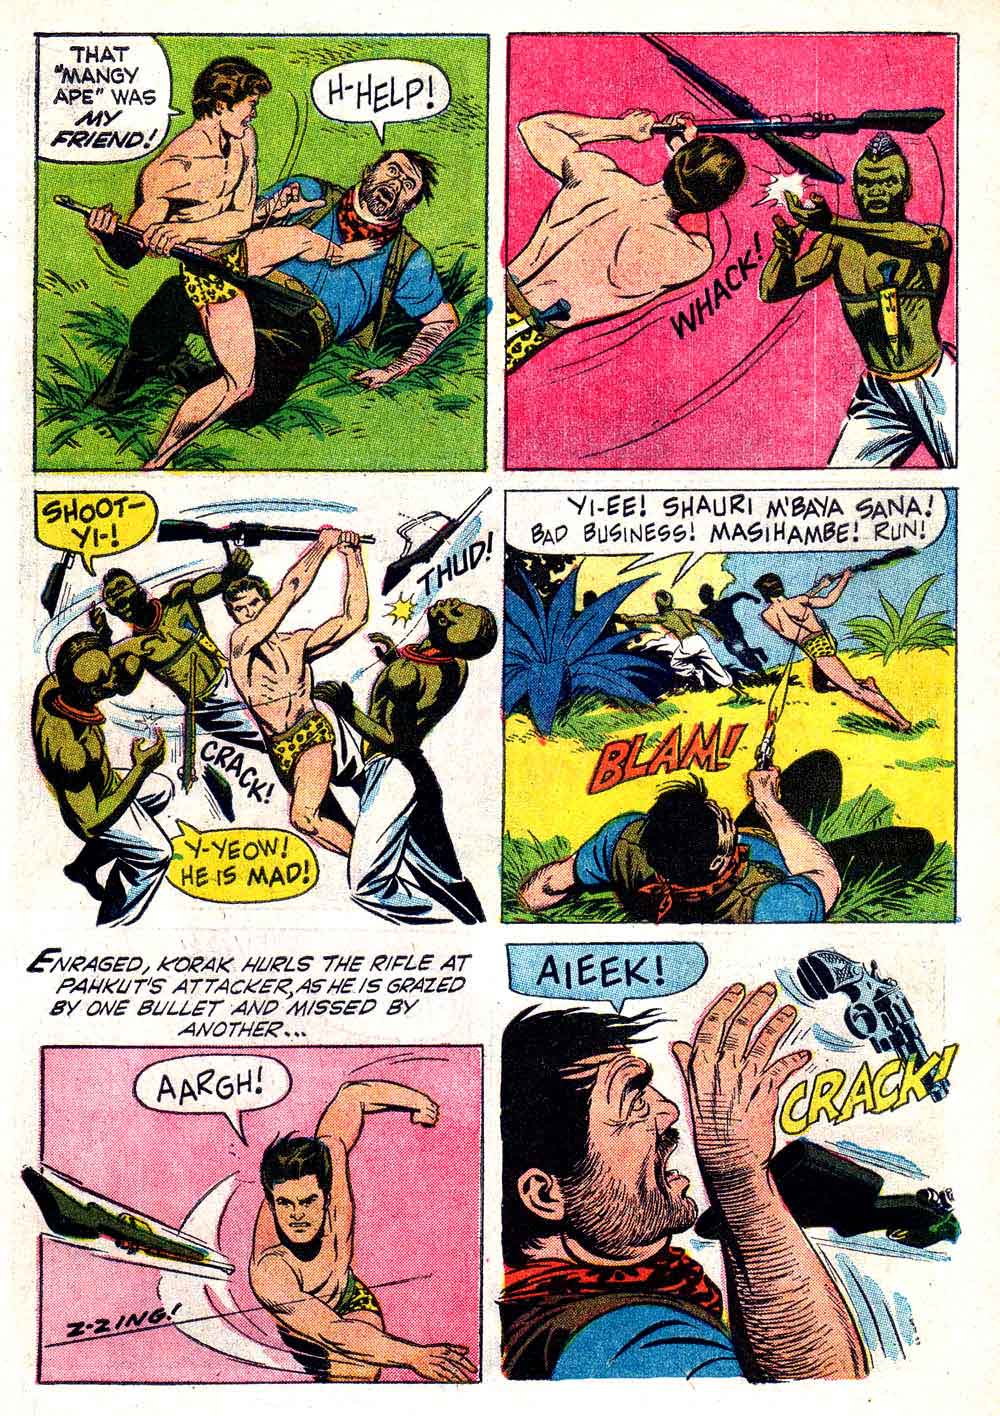 Korak Son of Tarzan v1 #10 gold key silver age 1960s comic book page art by Russ Manning